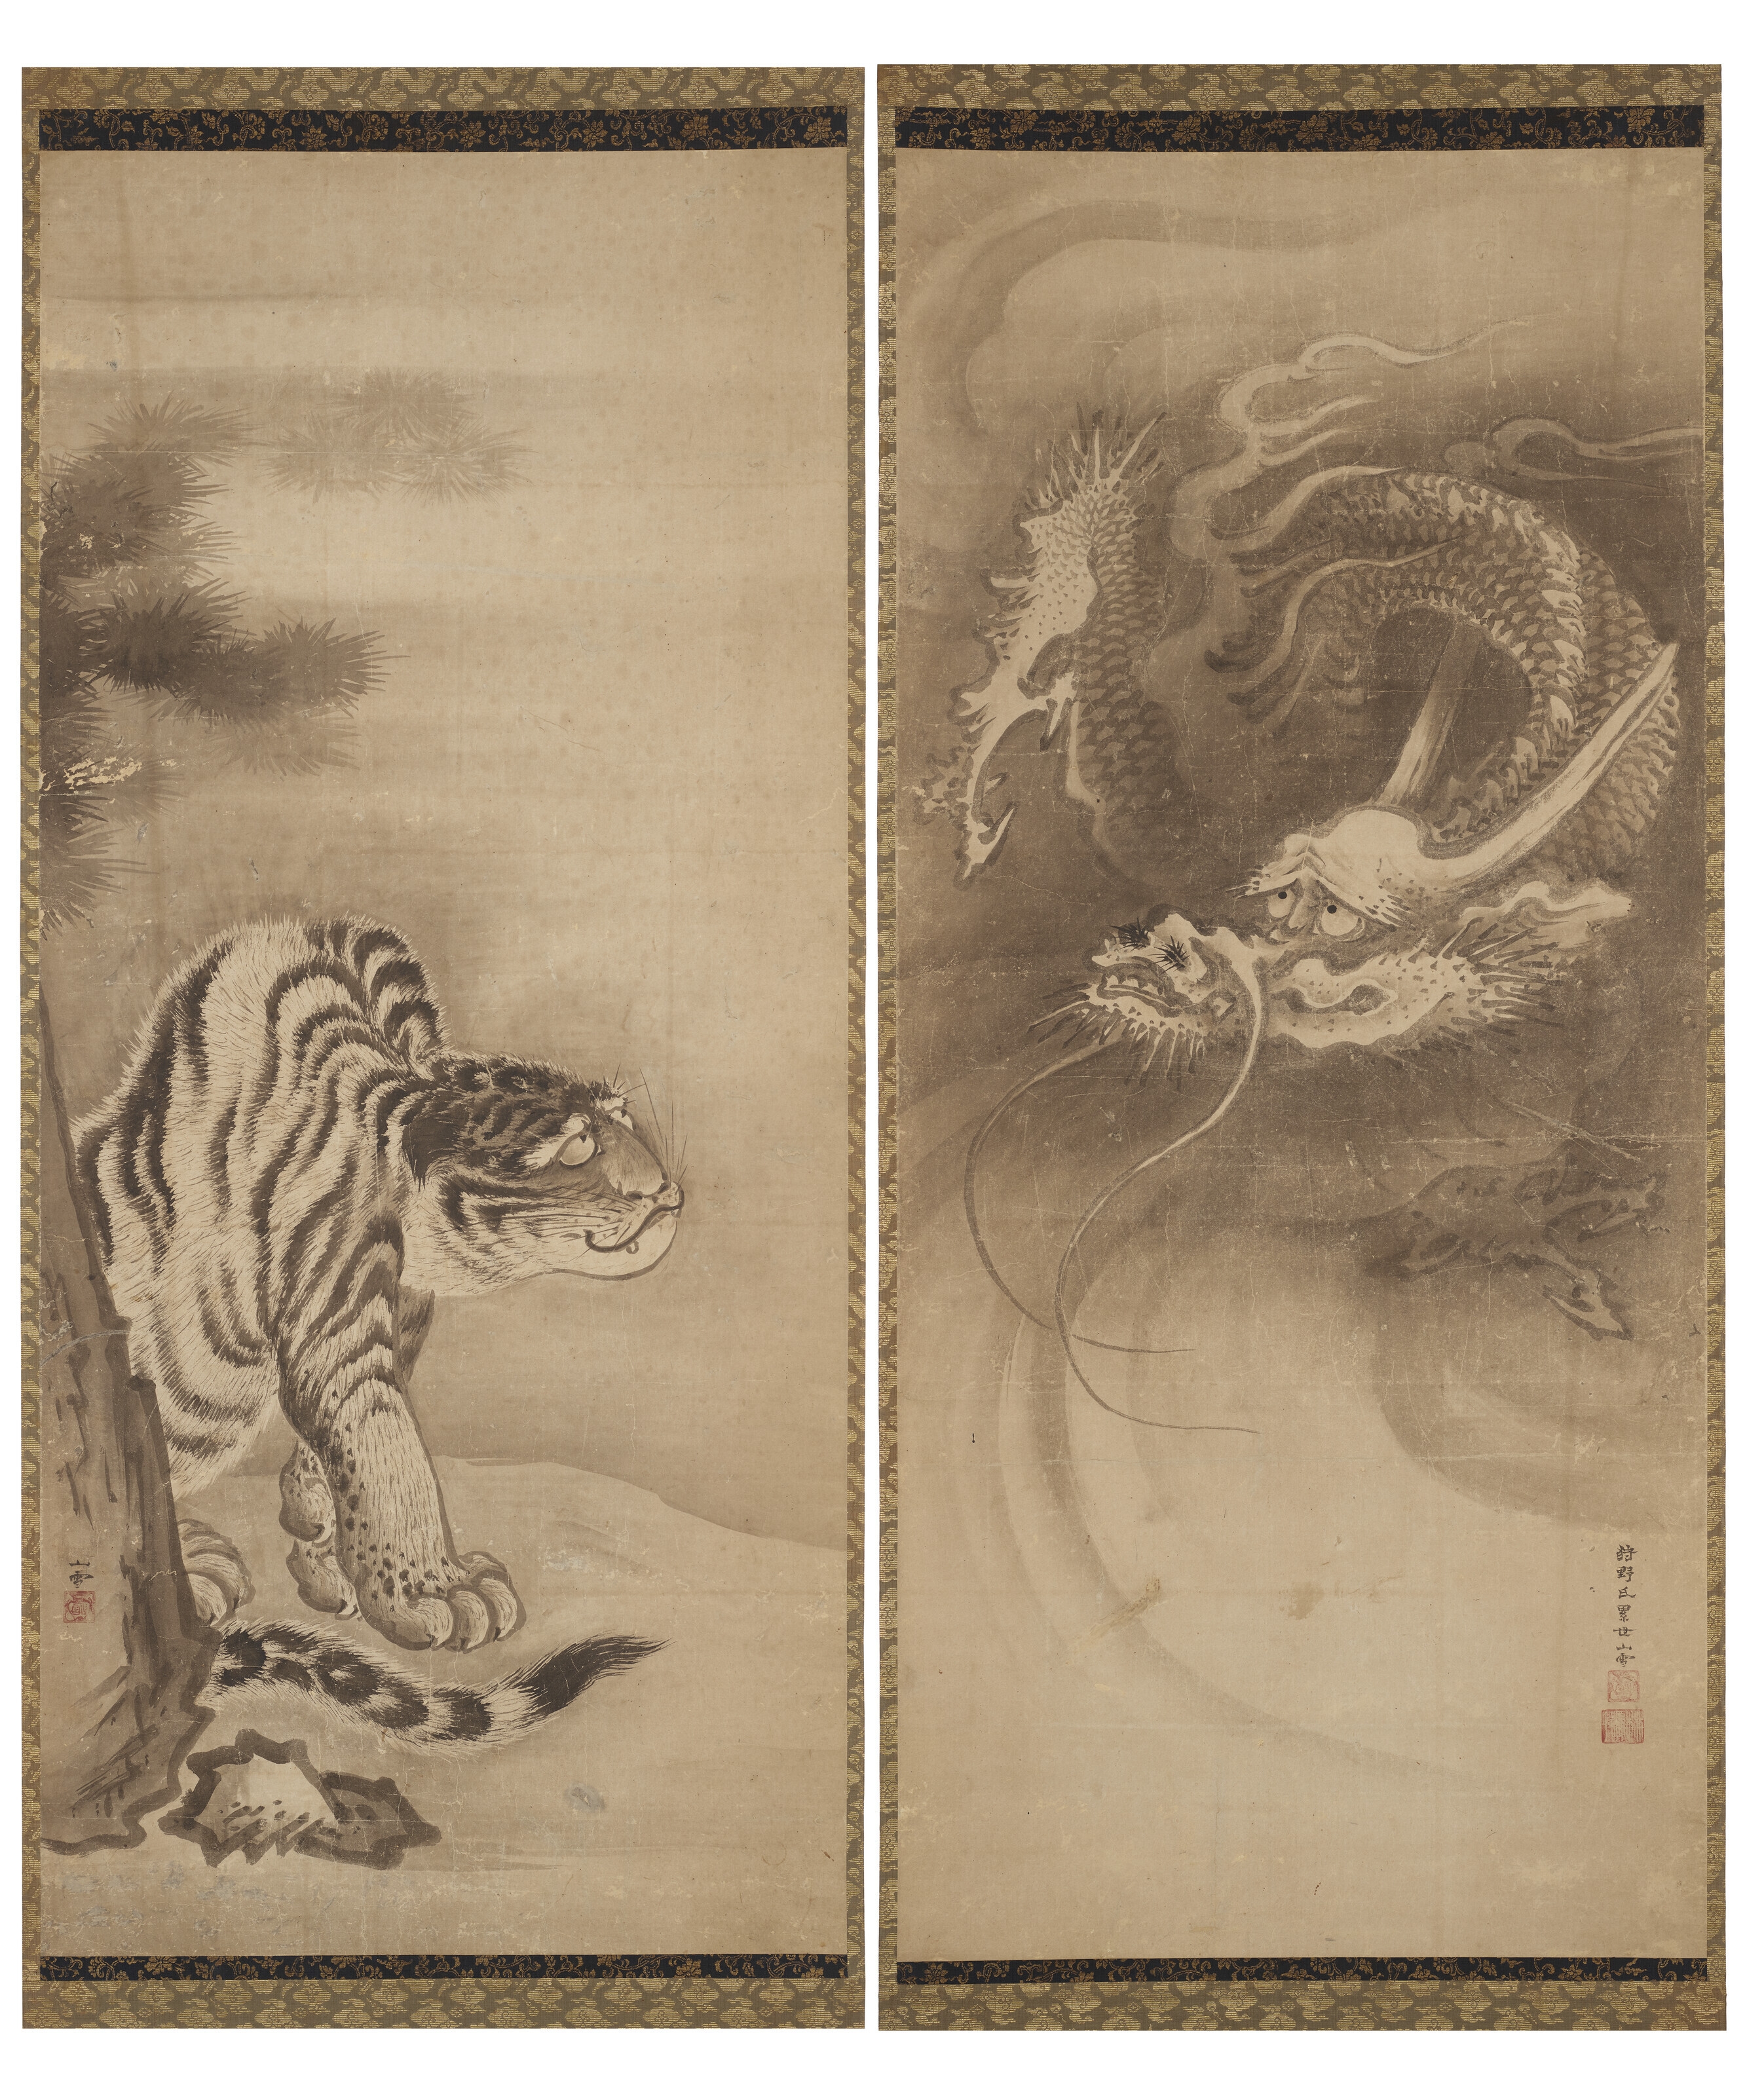 japanese art tiger dragon